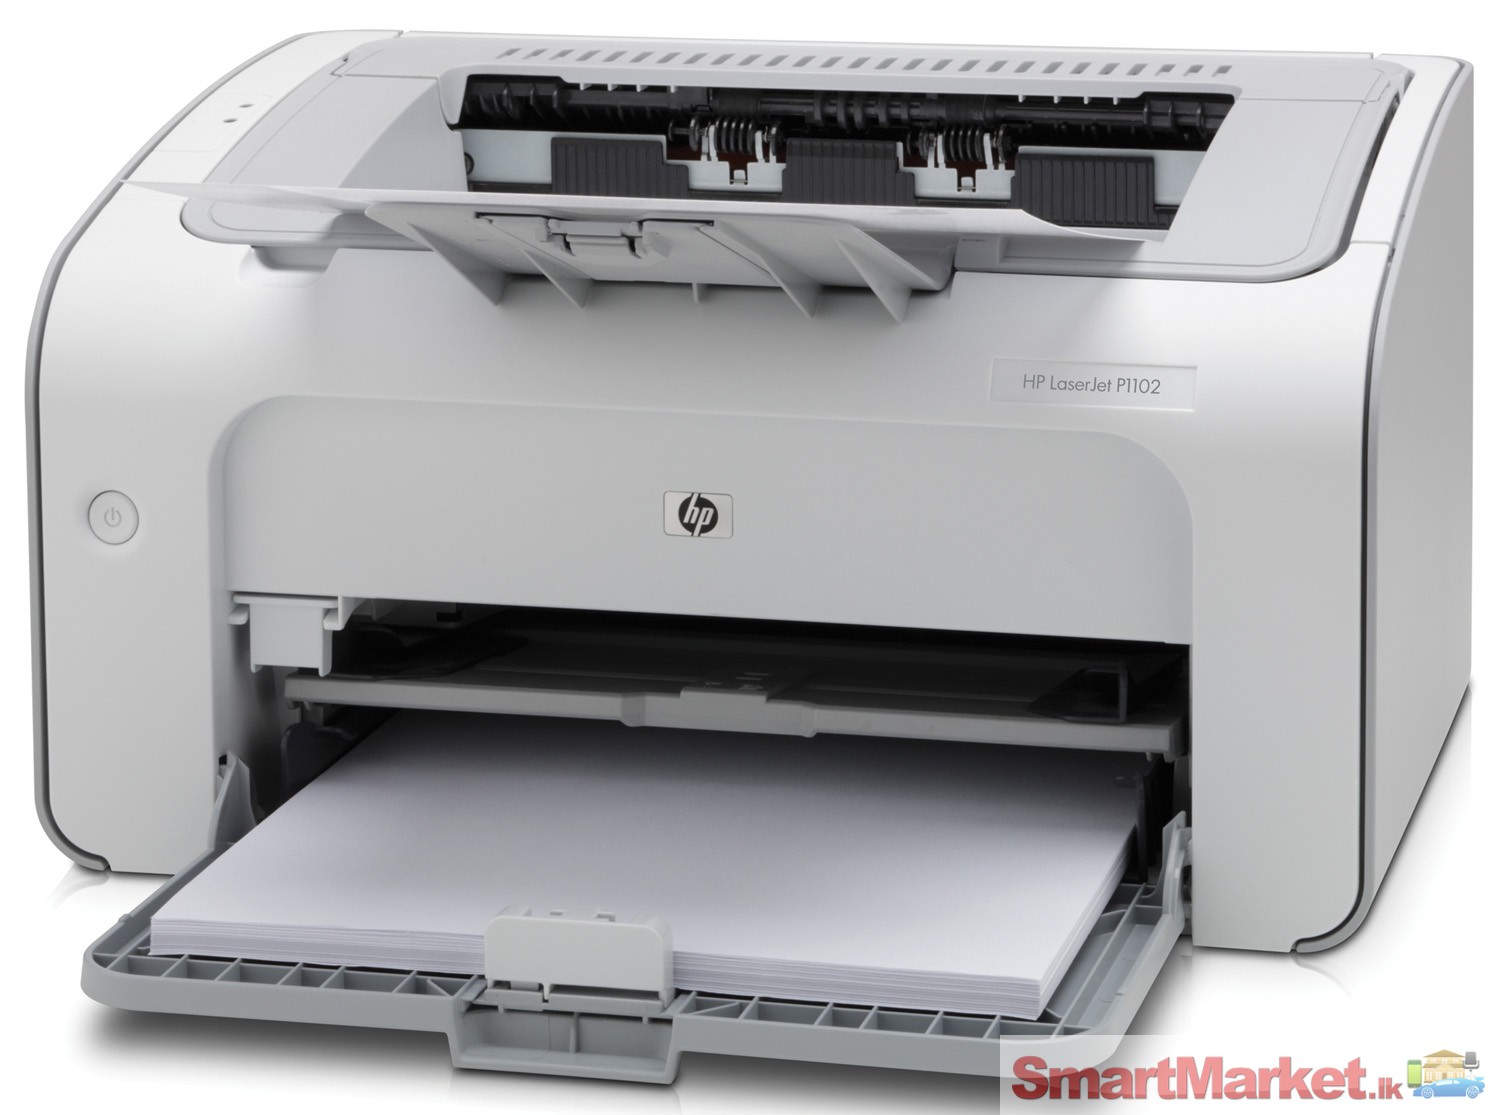 HP LaserJet Pro P1102 Printer. (Brand New)